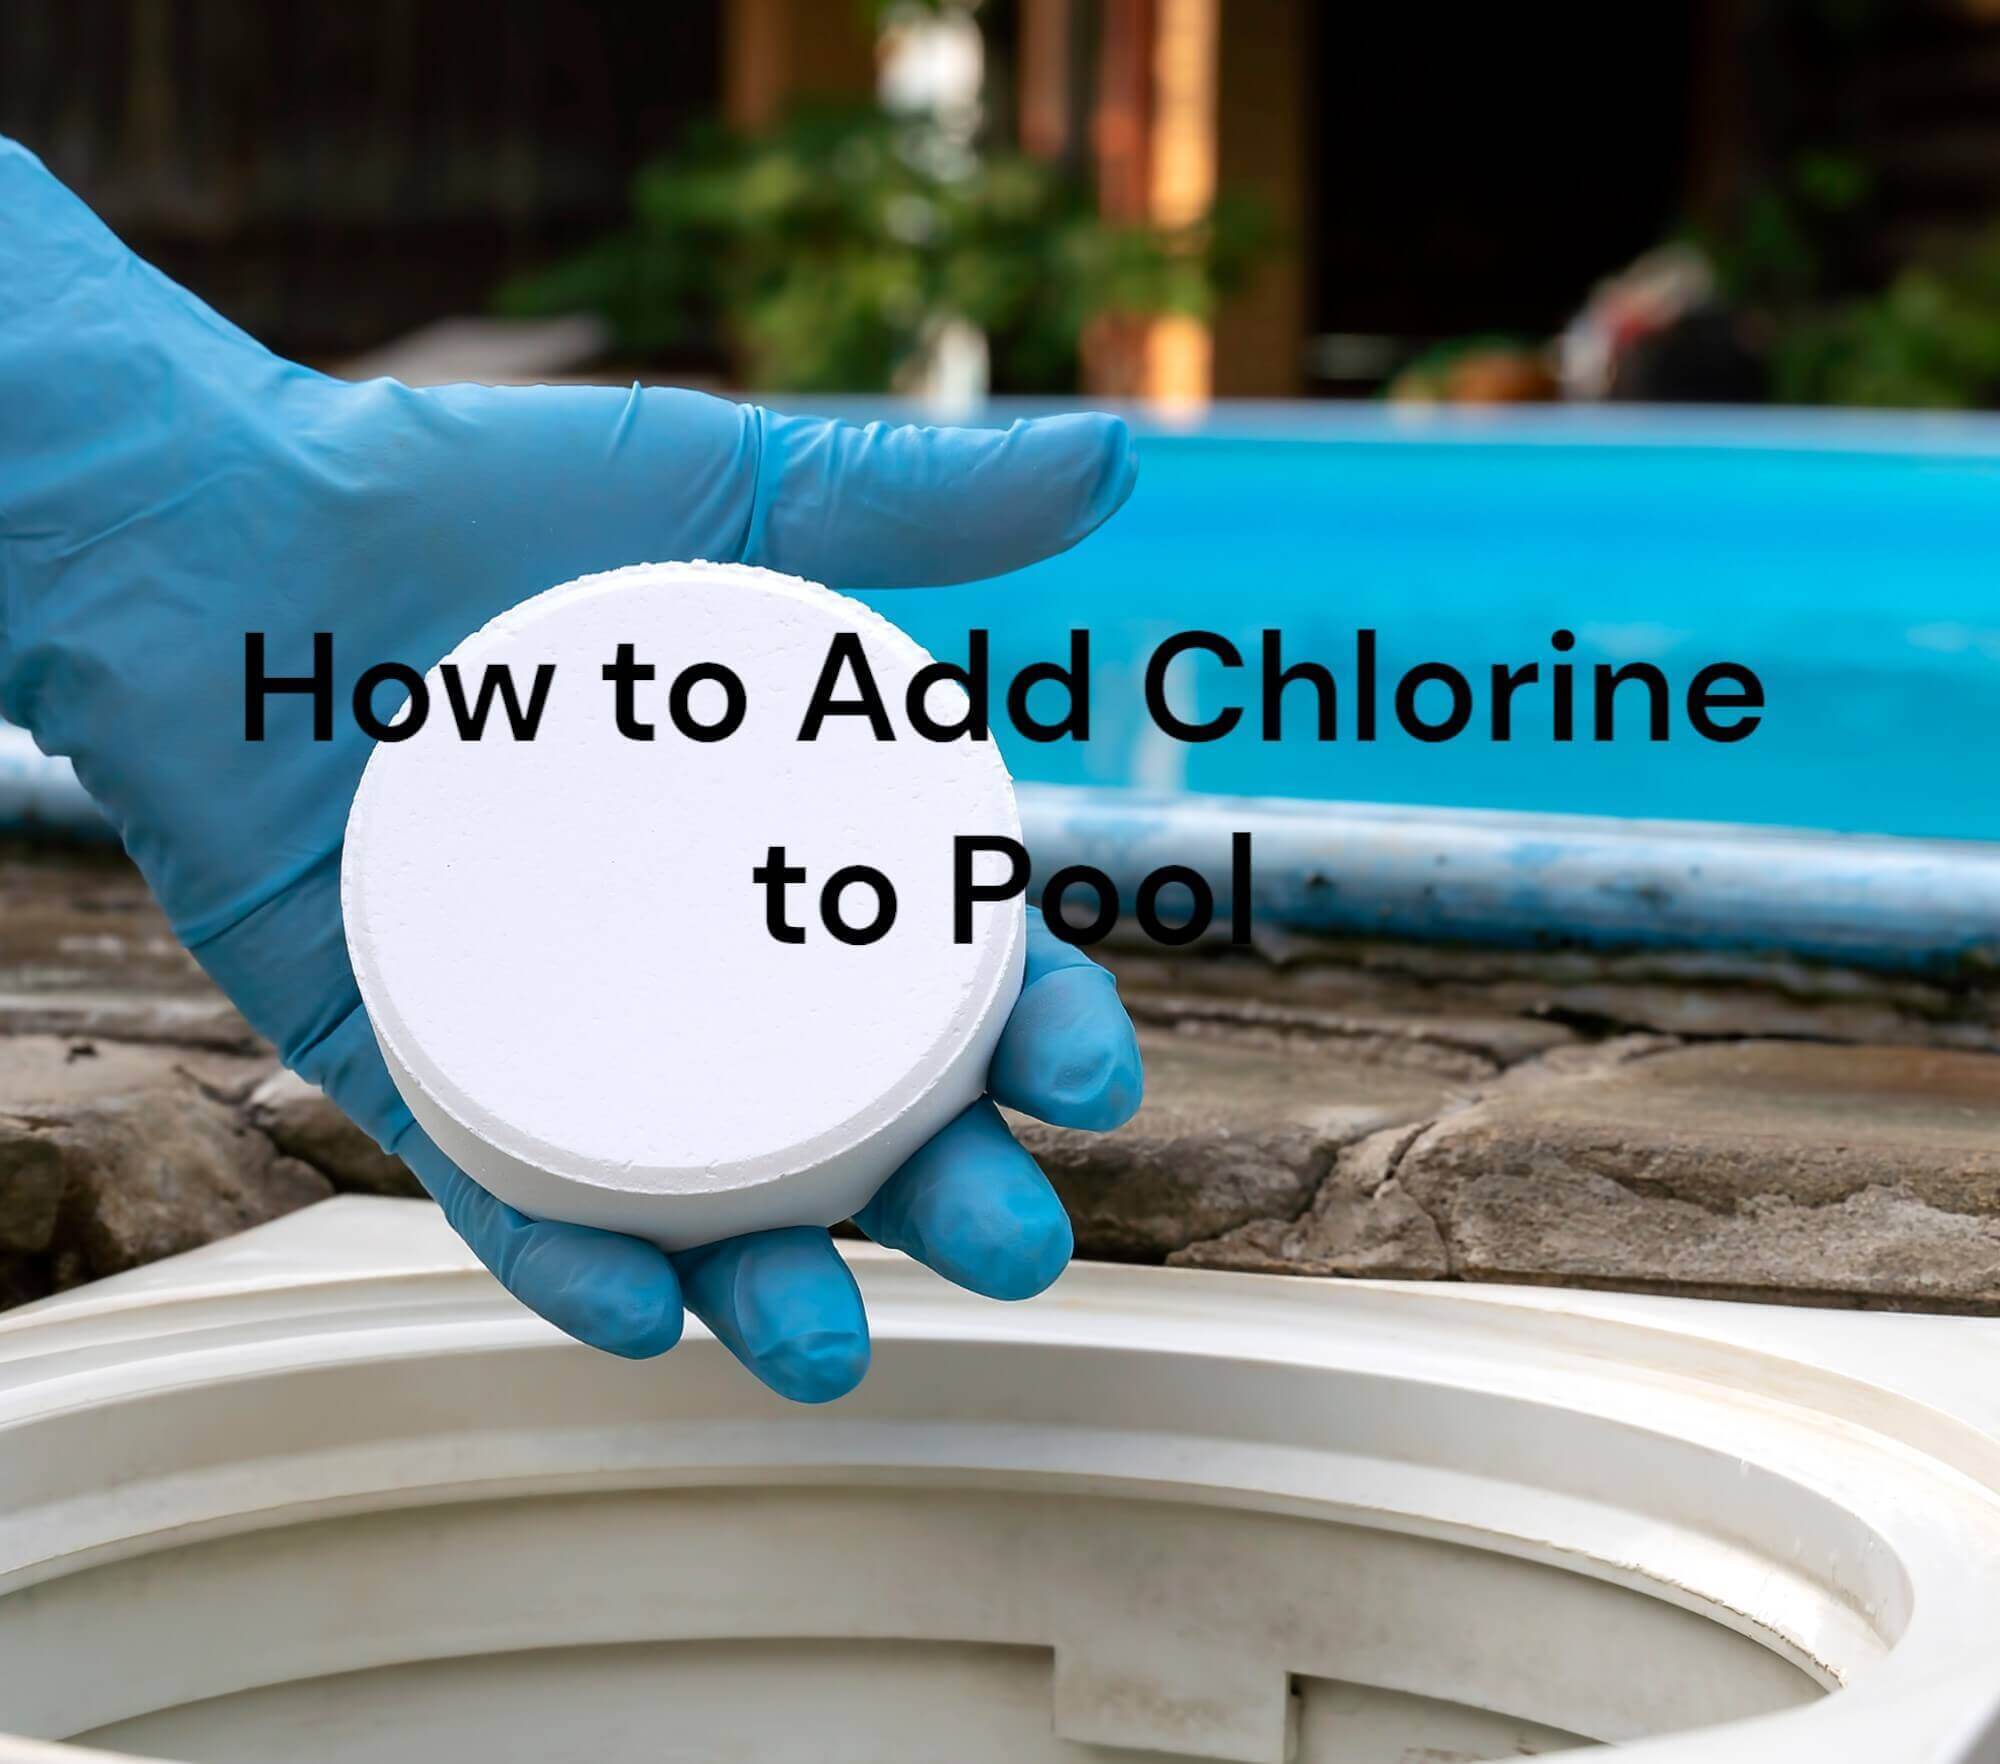 Add Chlorine to Pool